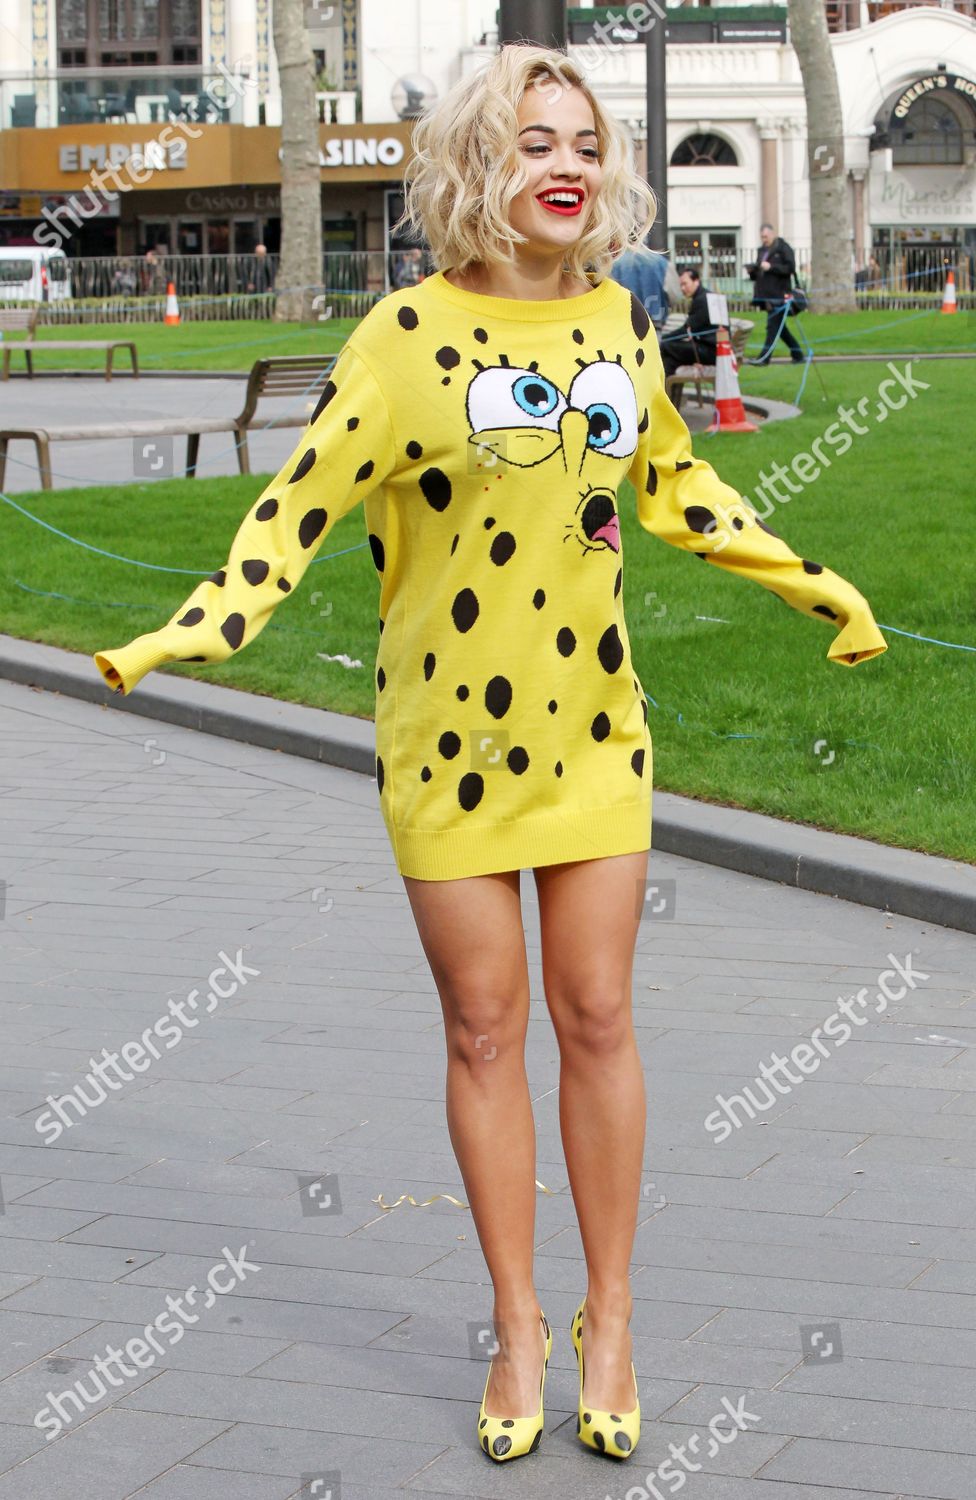 Rita Ora Dancing Editorial Stock Photo - Stock Image | Shutterstock